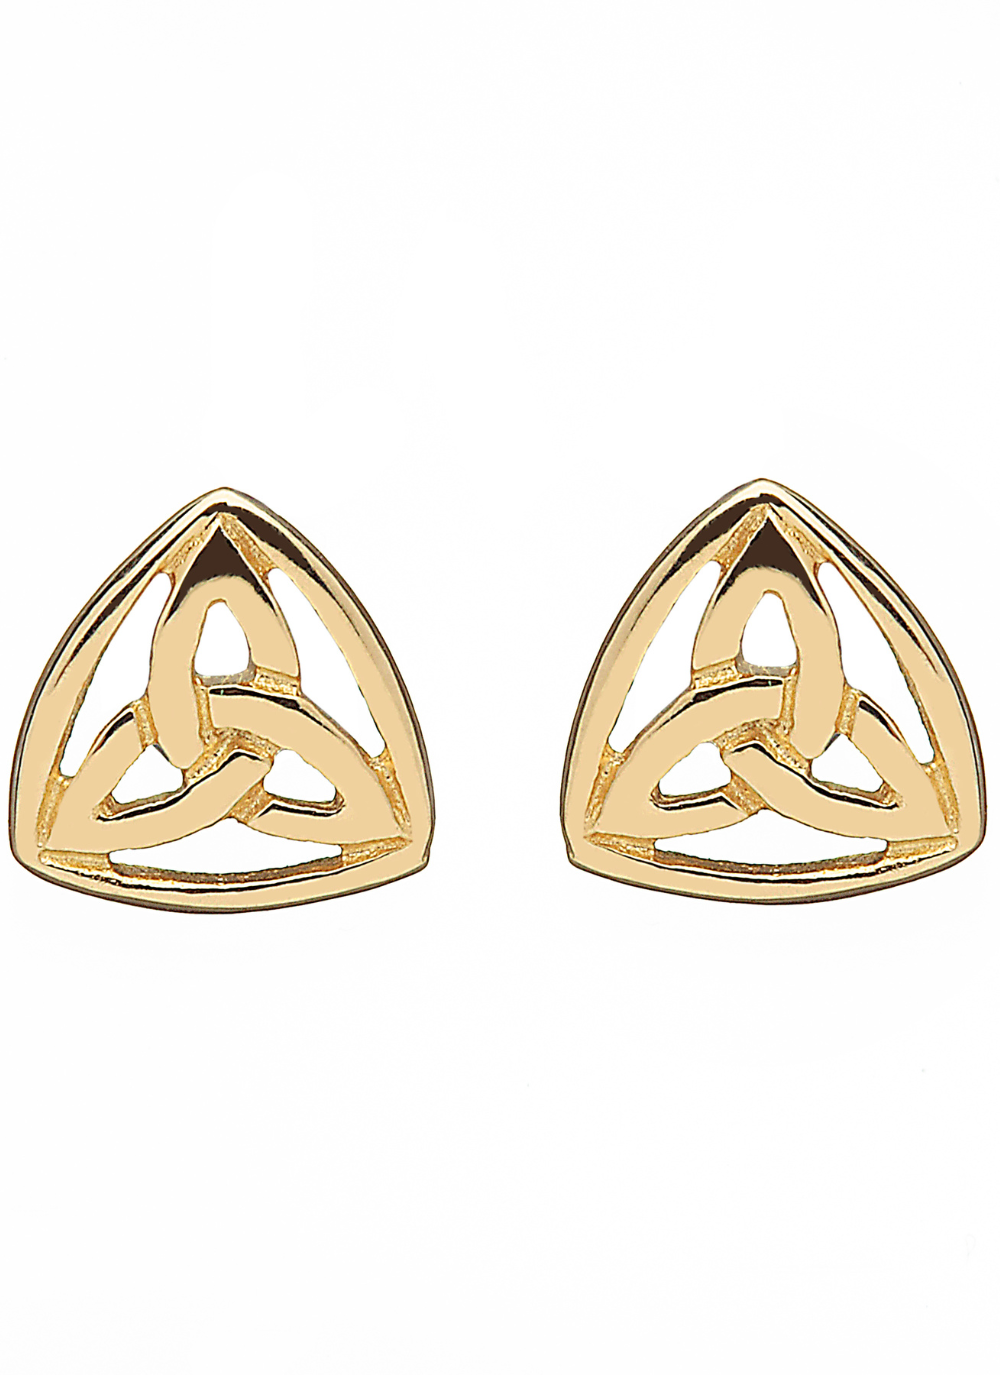 10ct Gold Trinity Knot Earrings | Blarney